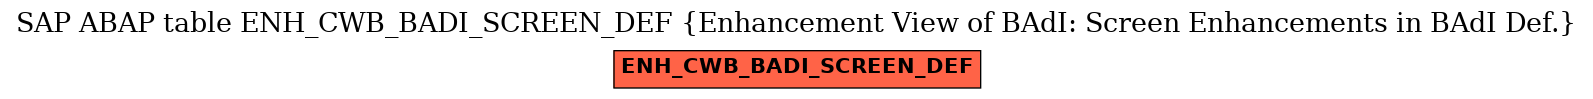 E-R Diagram for table ENH_CWB_BADI_SCREEN_DEF (Enhancement View of BAdI: Screen Enhancements in BAdI Def.)